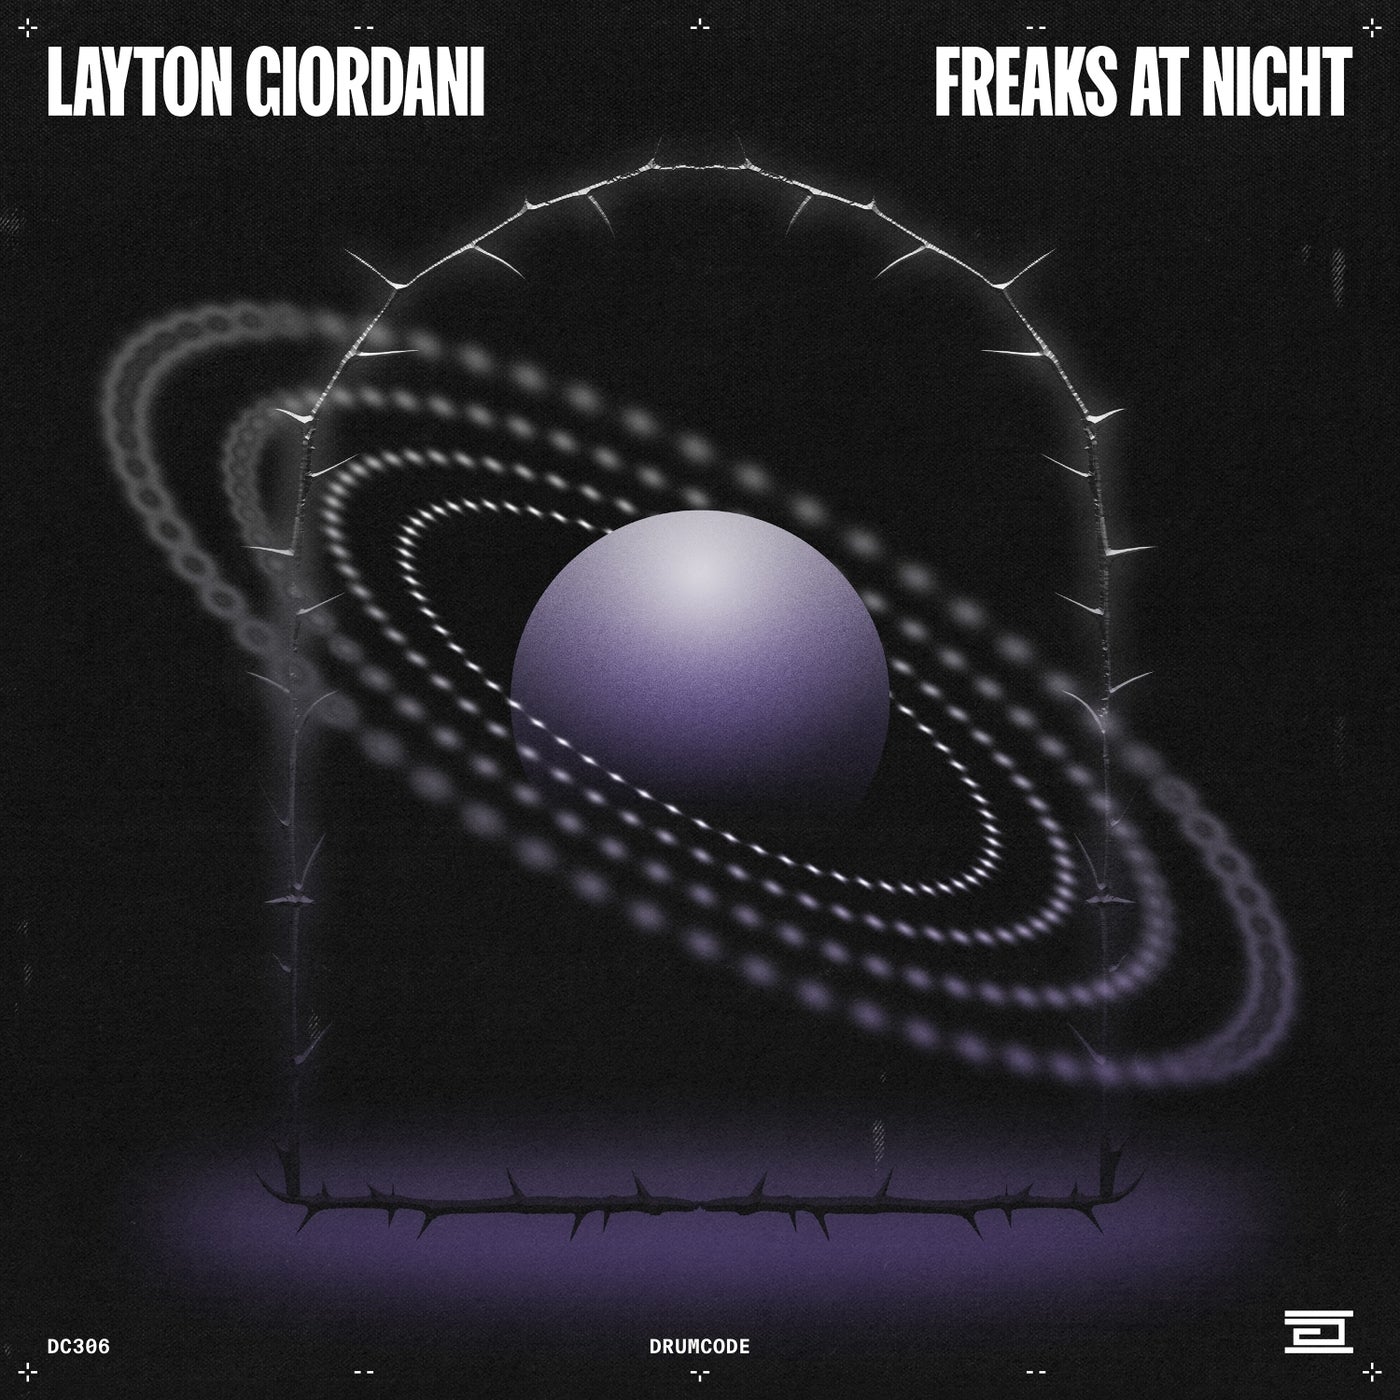 image cover: Layton Giordani - Freaks at Night on Drumcode